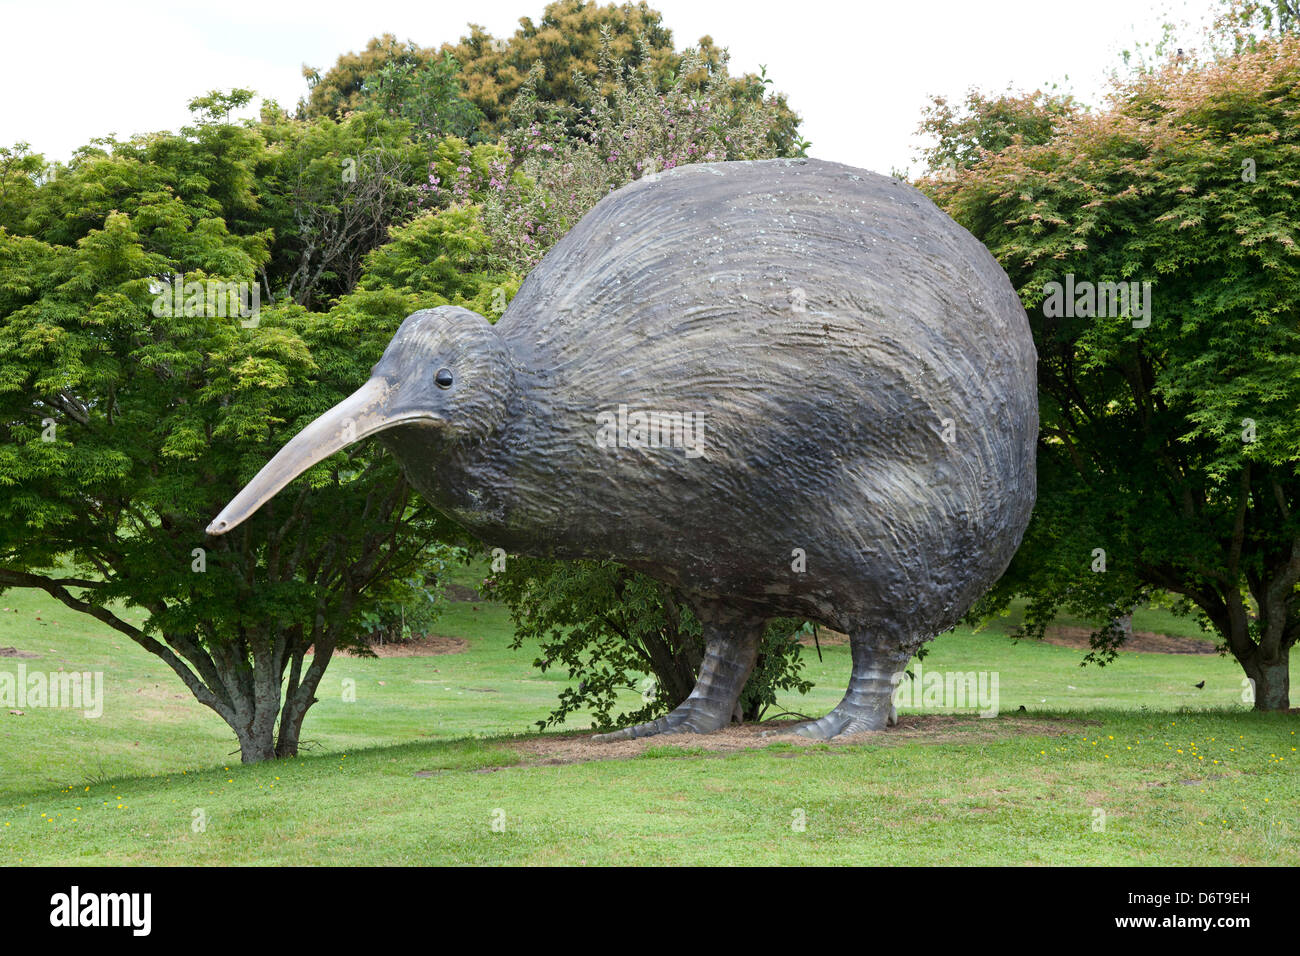 Giant kiwi in Kiwifruit country in te Puke, New Zealand Stock Photo